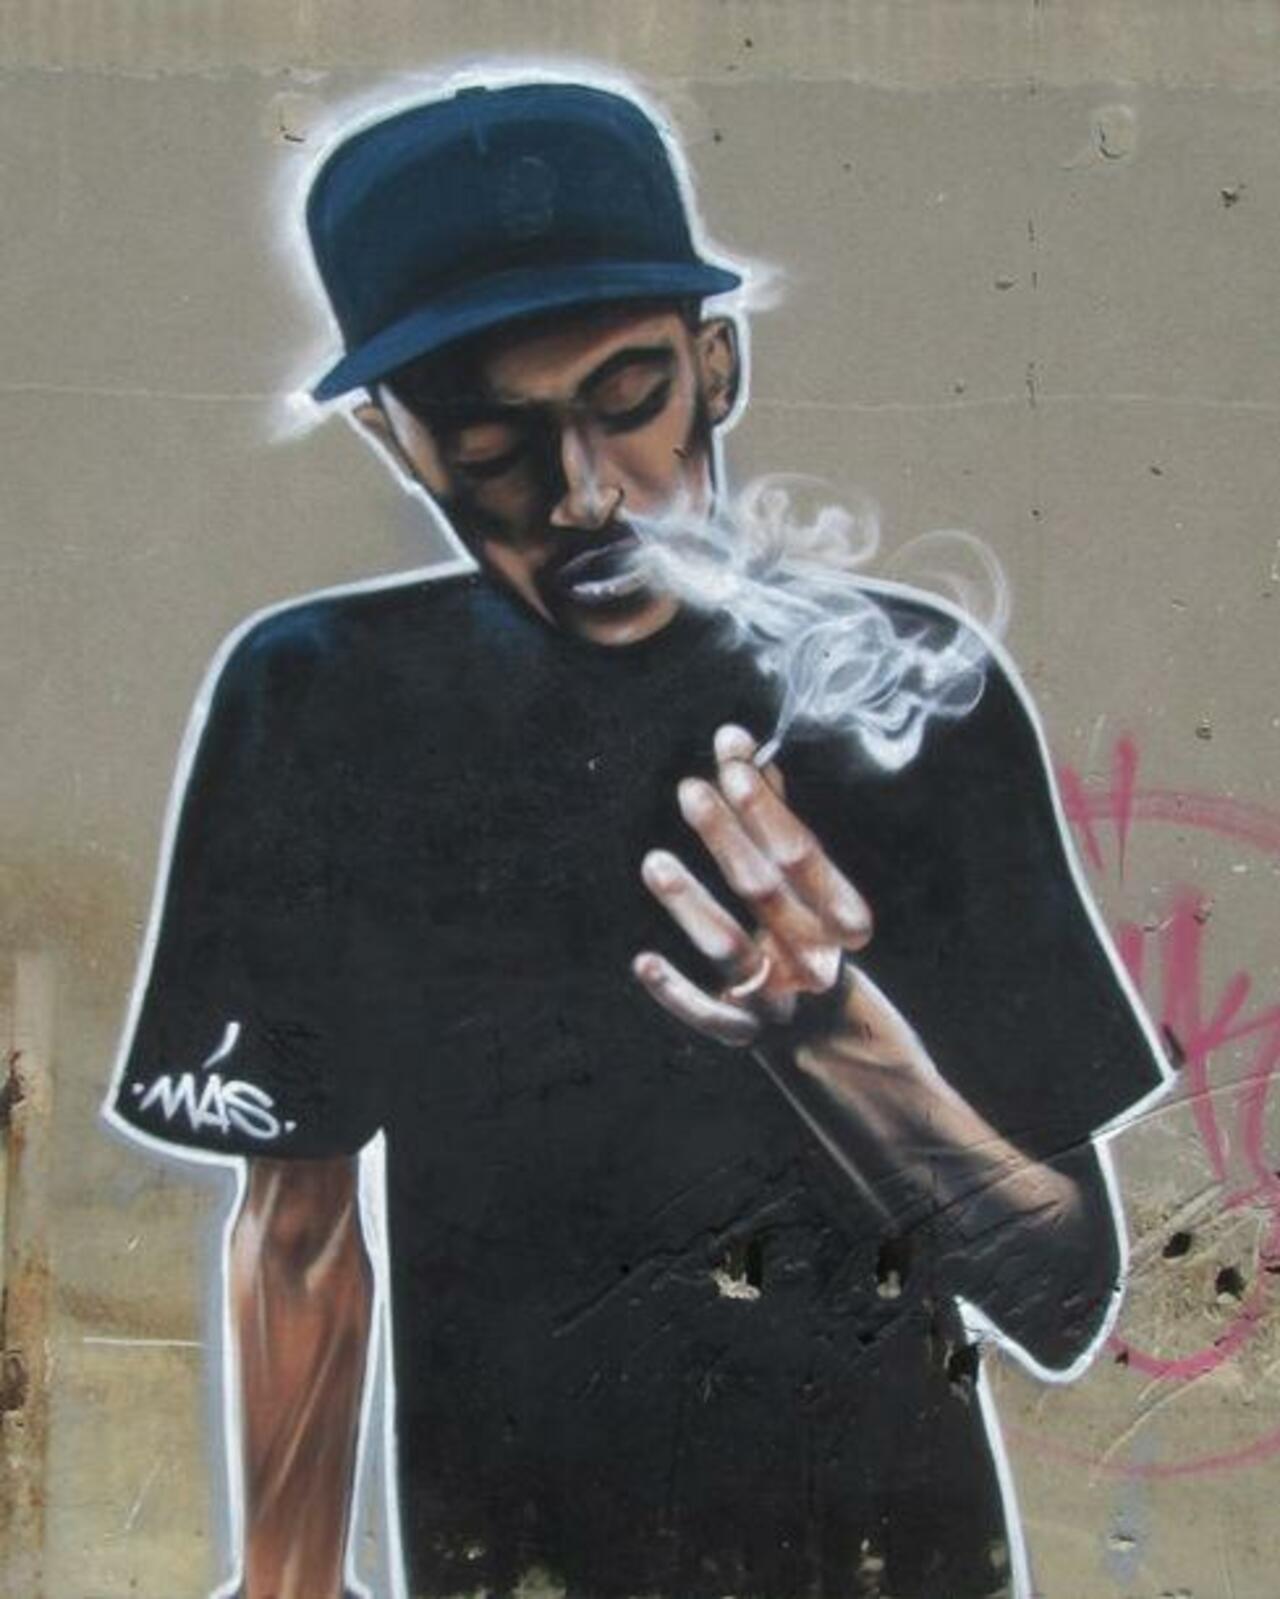 #art #streetart #graffiti 
#MAS http://t.co/TIbeEPJgiq